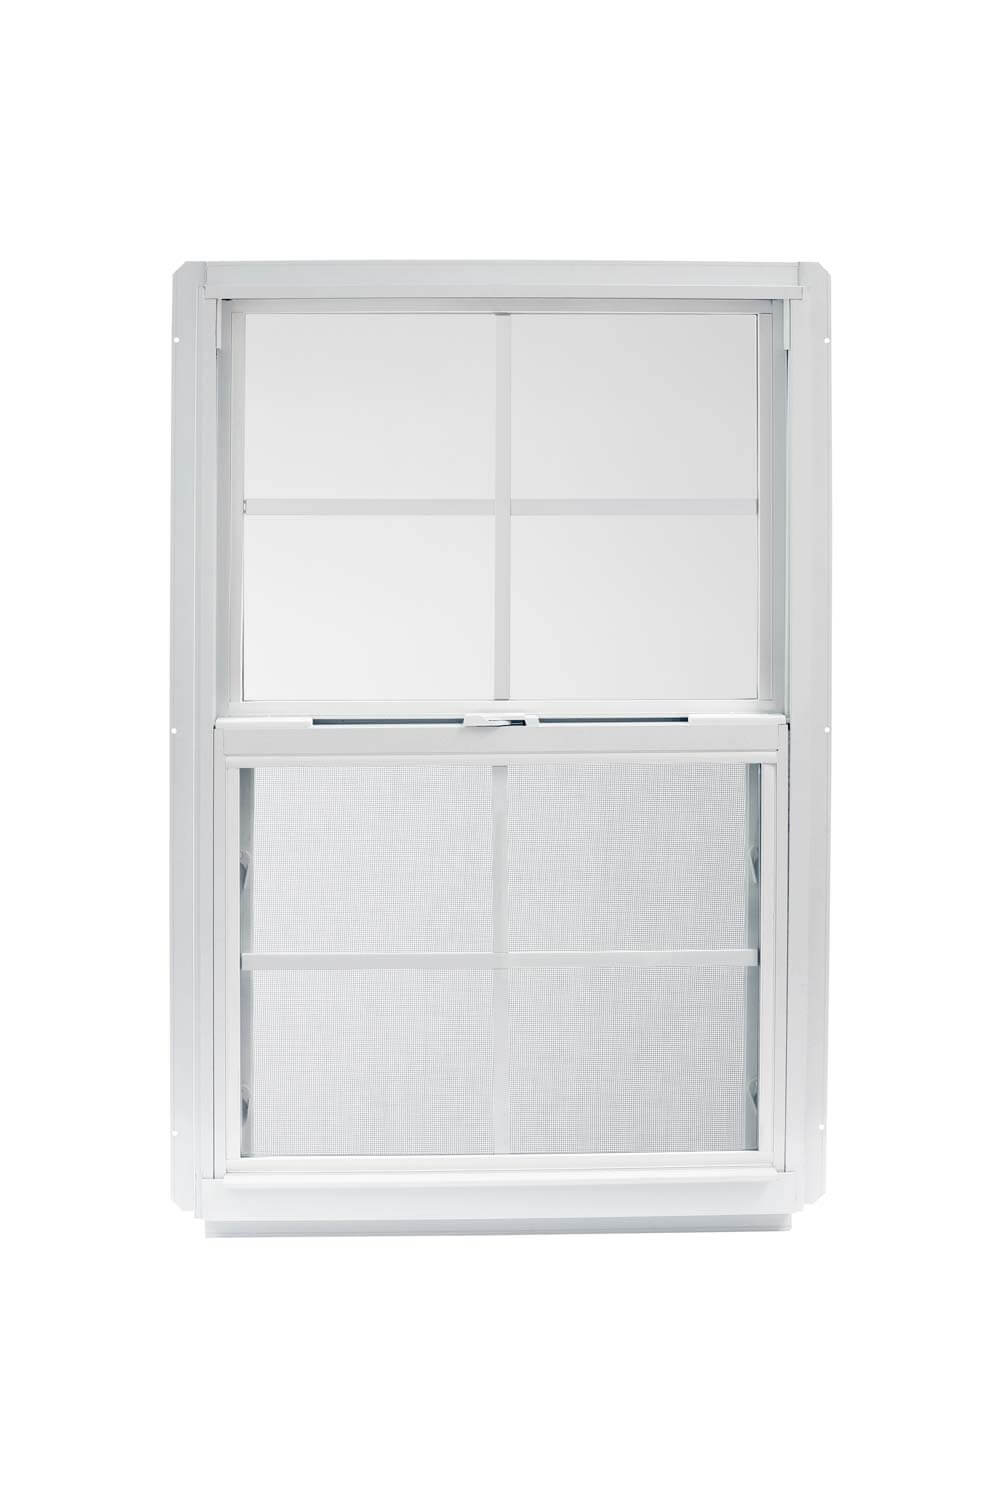 2' x 4'4" Bronze Aluminum Insulated Window (4/4 Window Pane Arrangement) Series 96